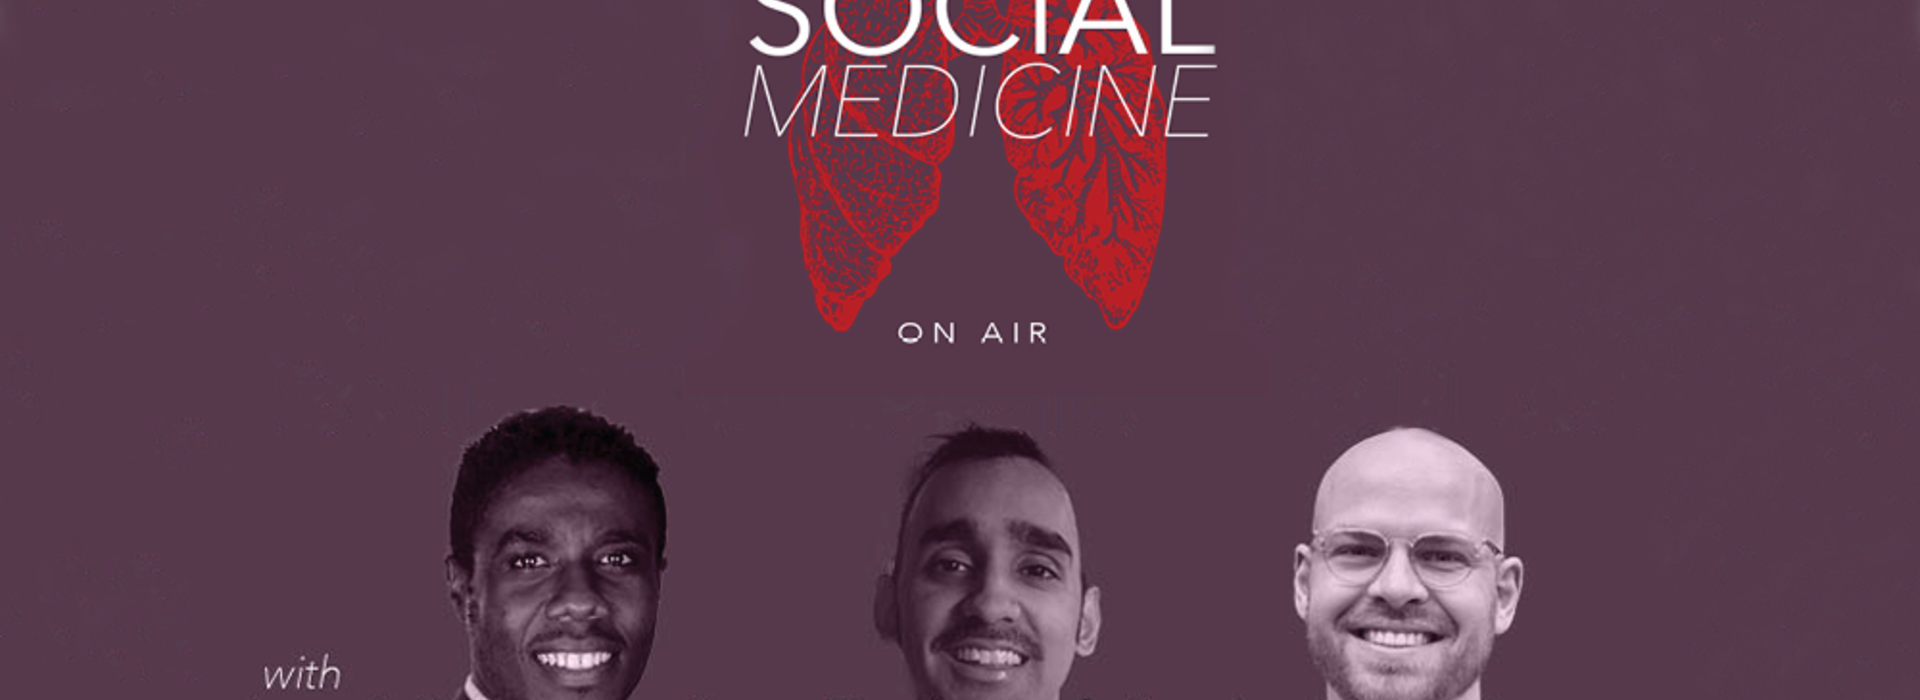 social medicine on air